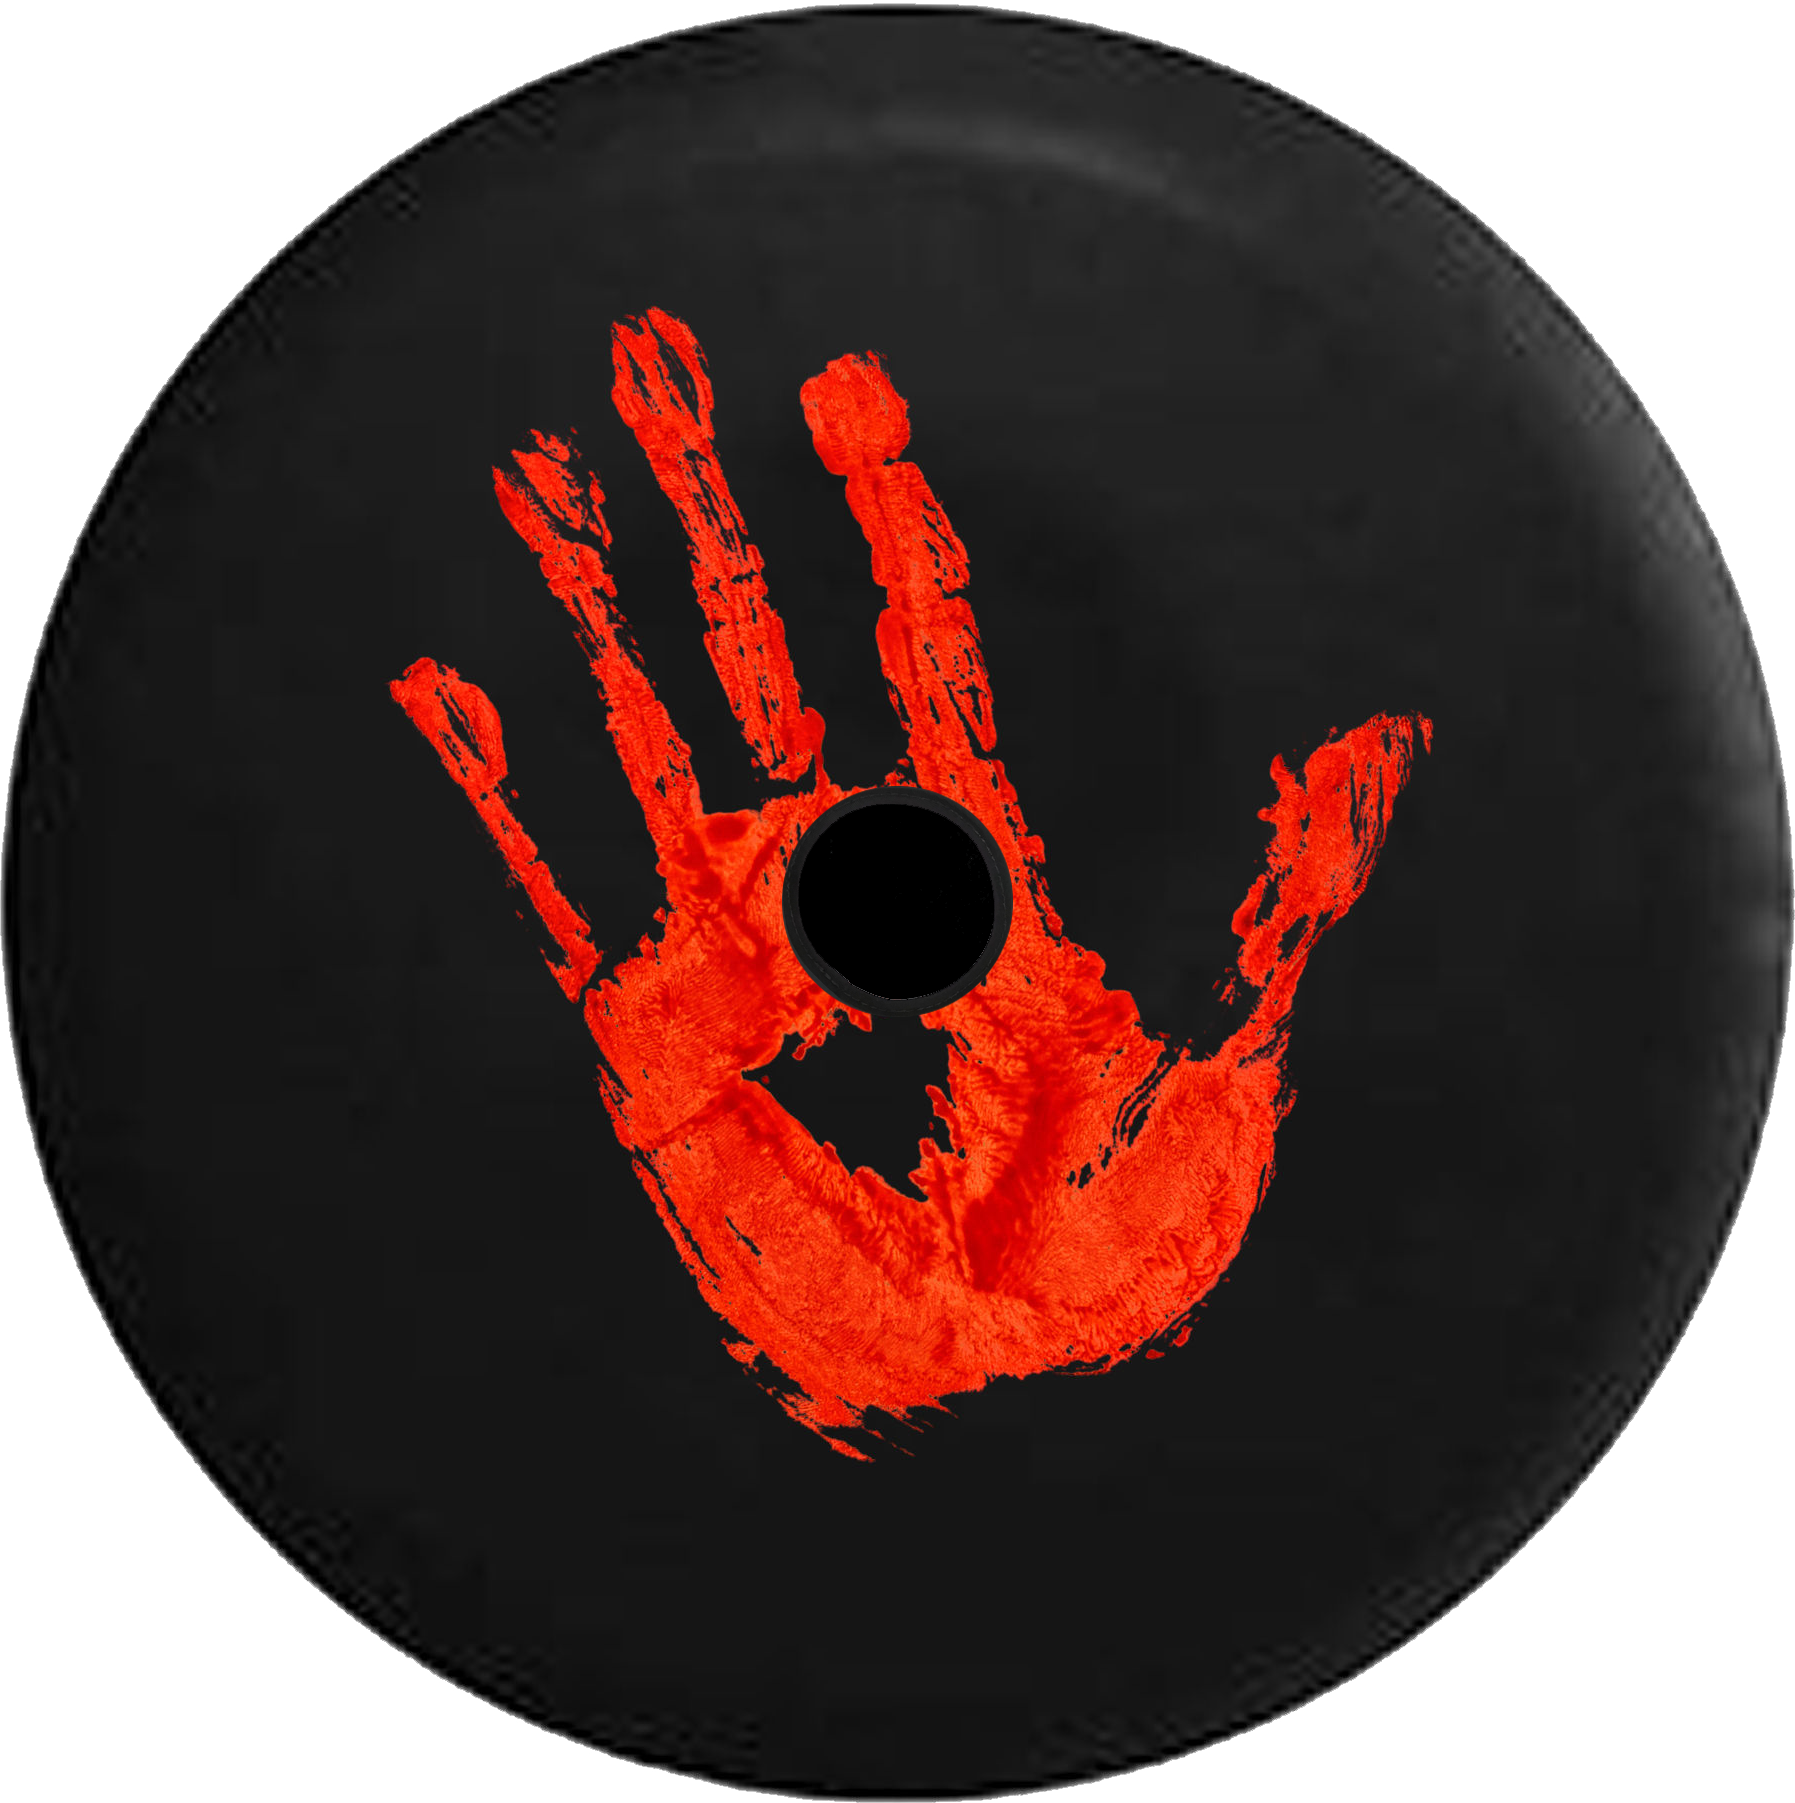 Red Handprint Vinyl Record PNG image